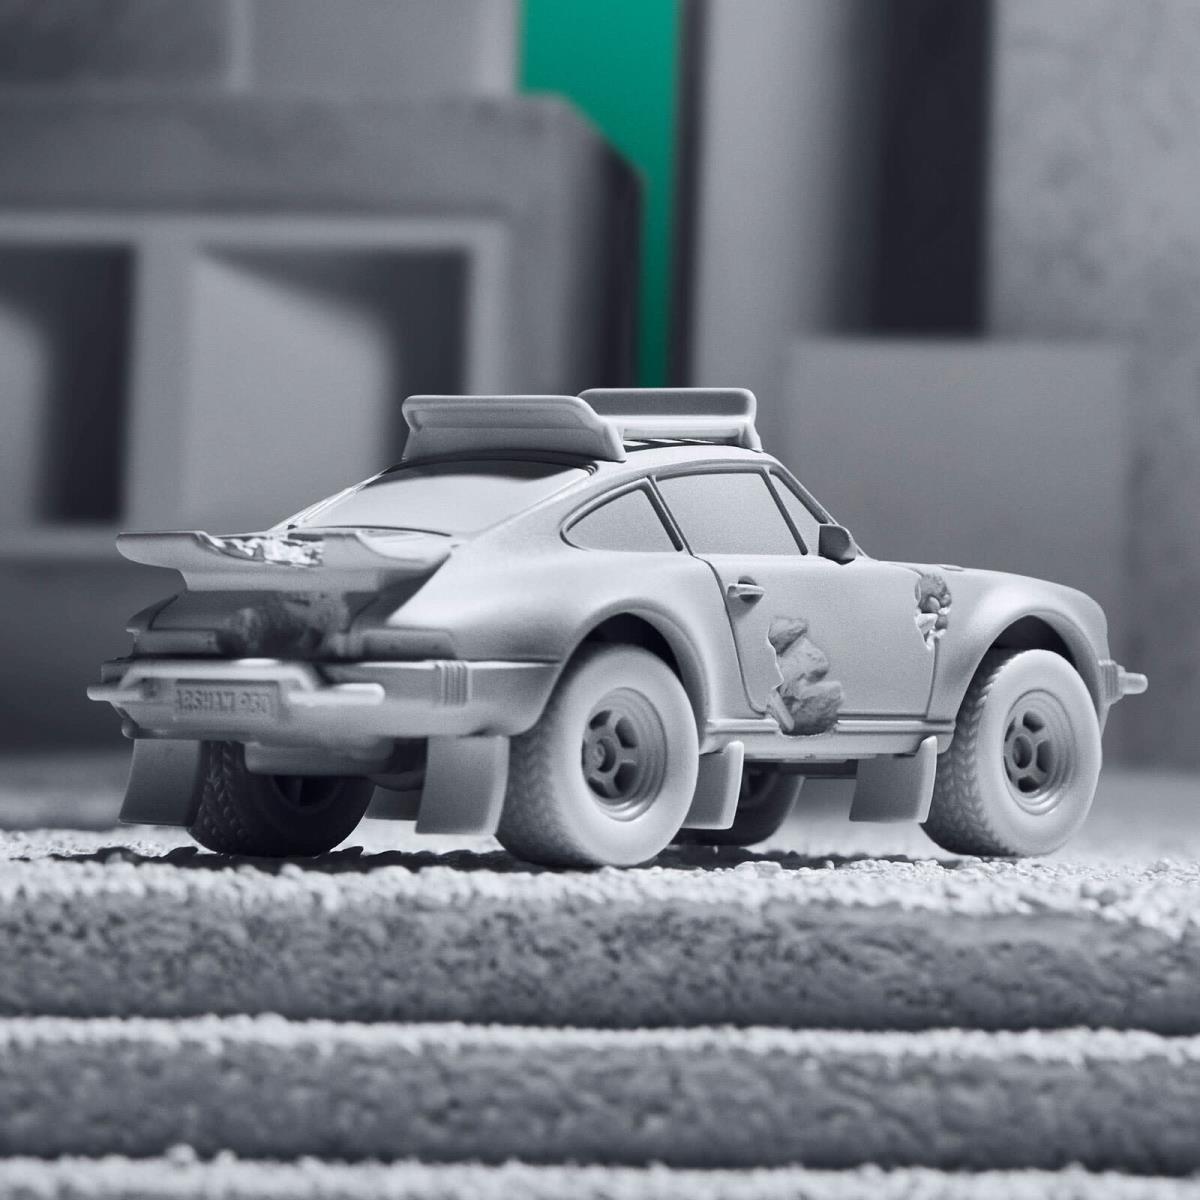 Mattel Creations Hot Wheels x Daniel Arsham Eroded Porsche Safari